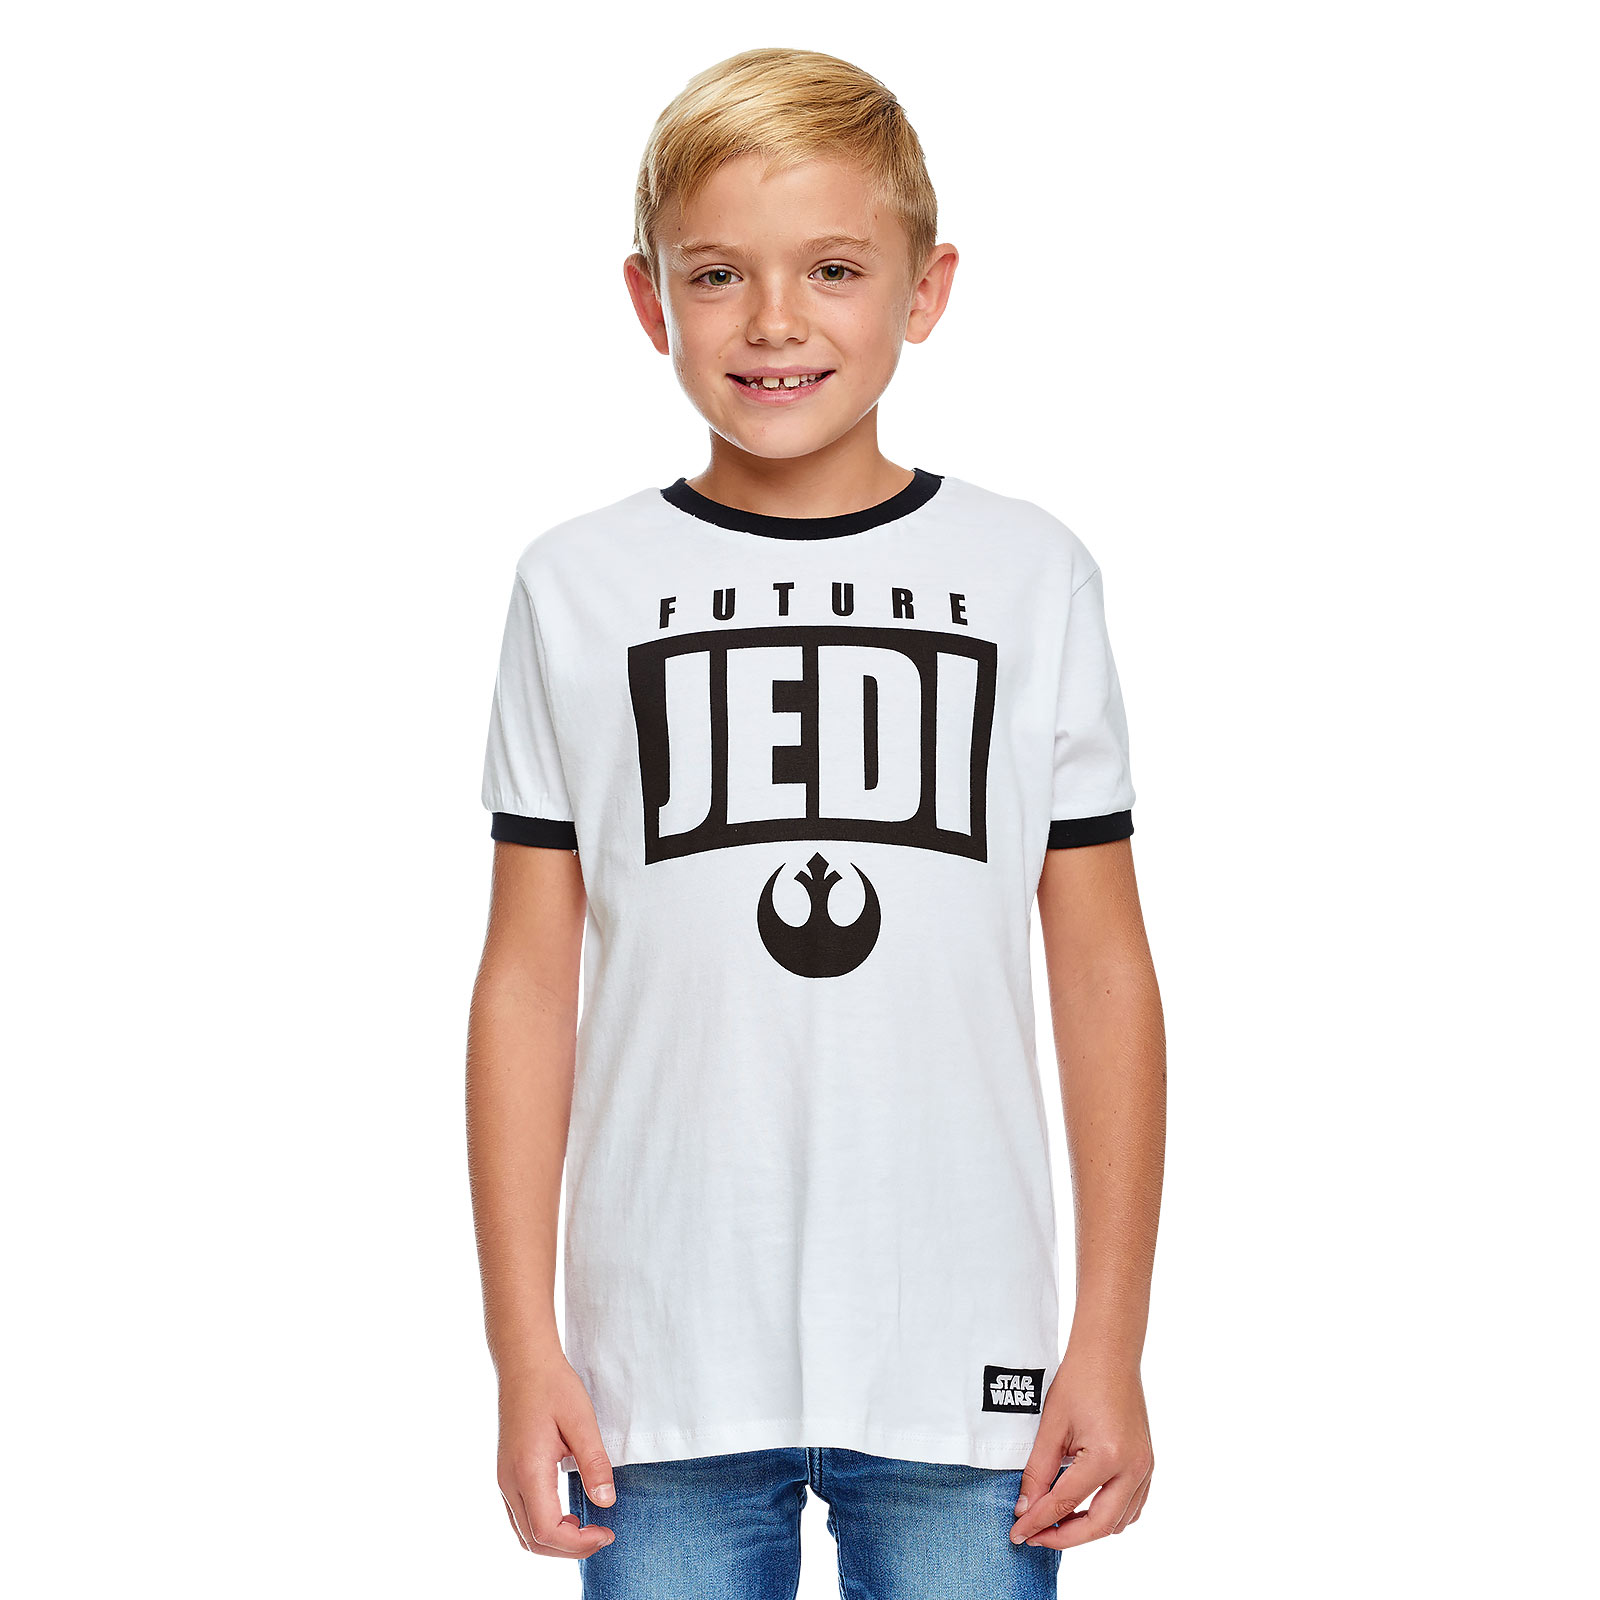 Star Wars - Future Jedi Kids T-Shirt White